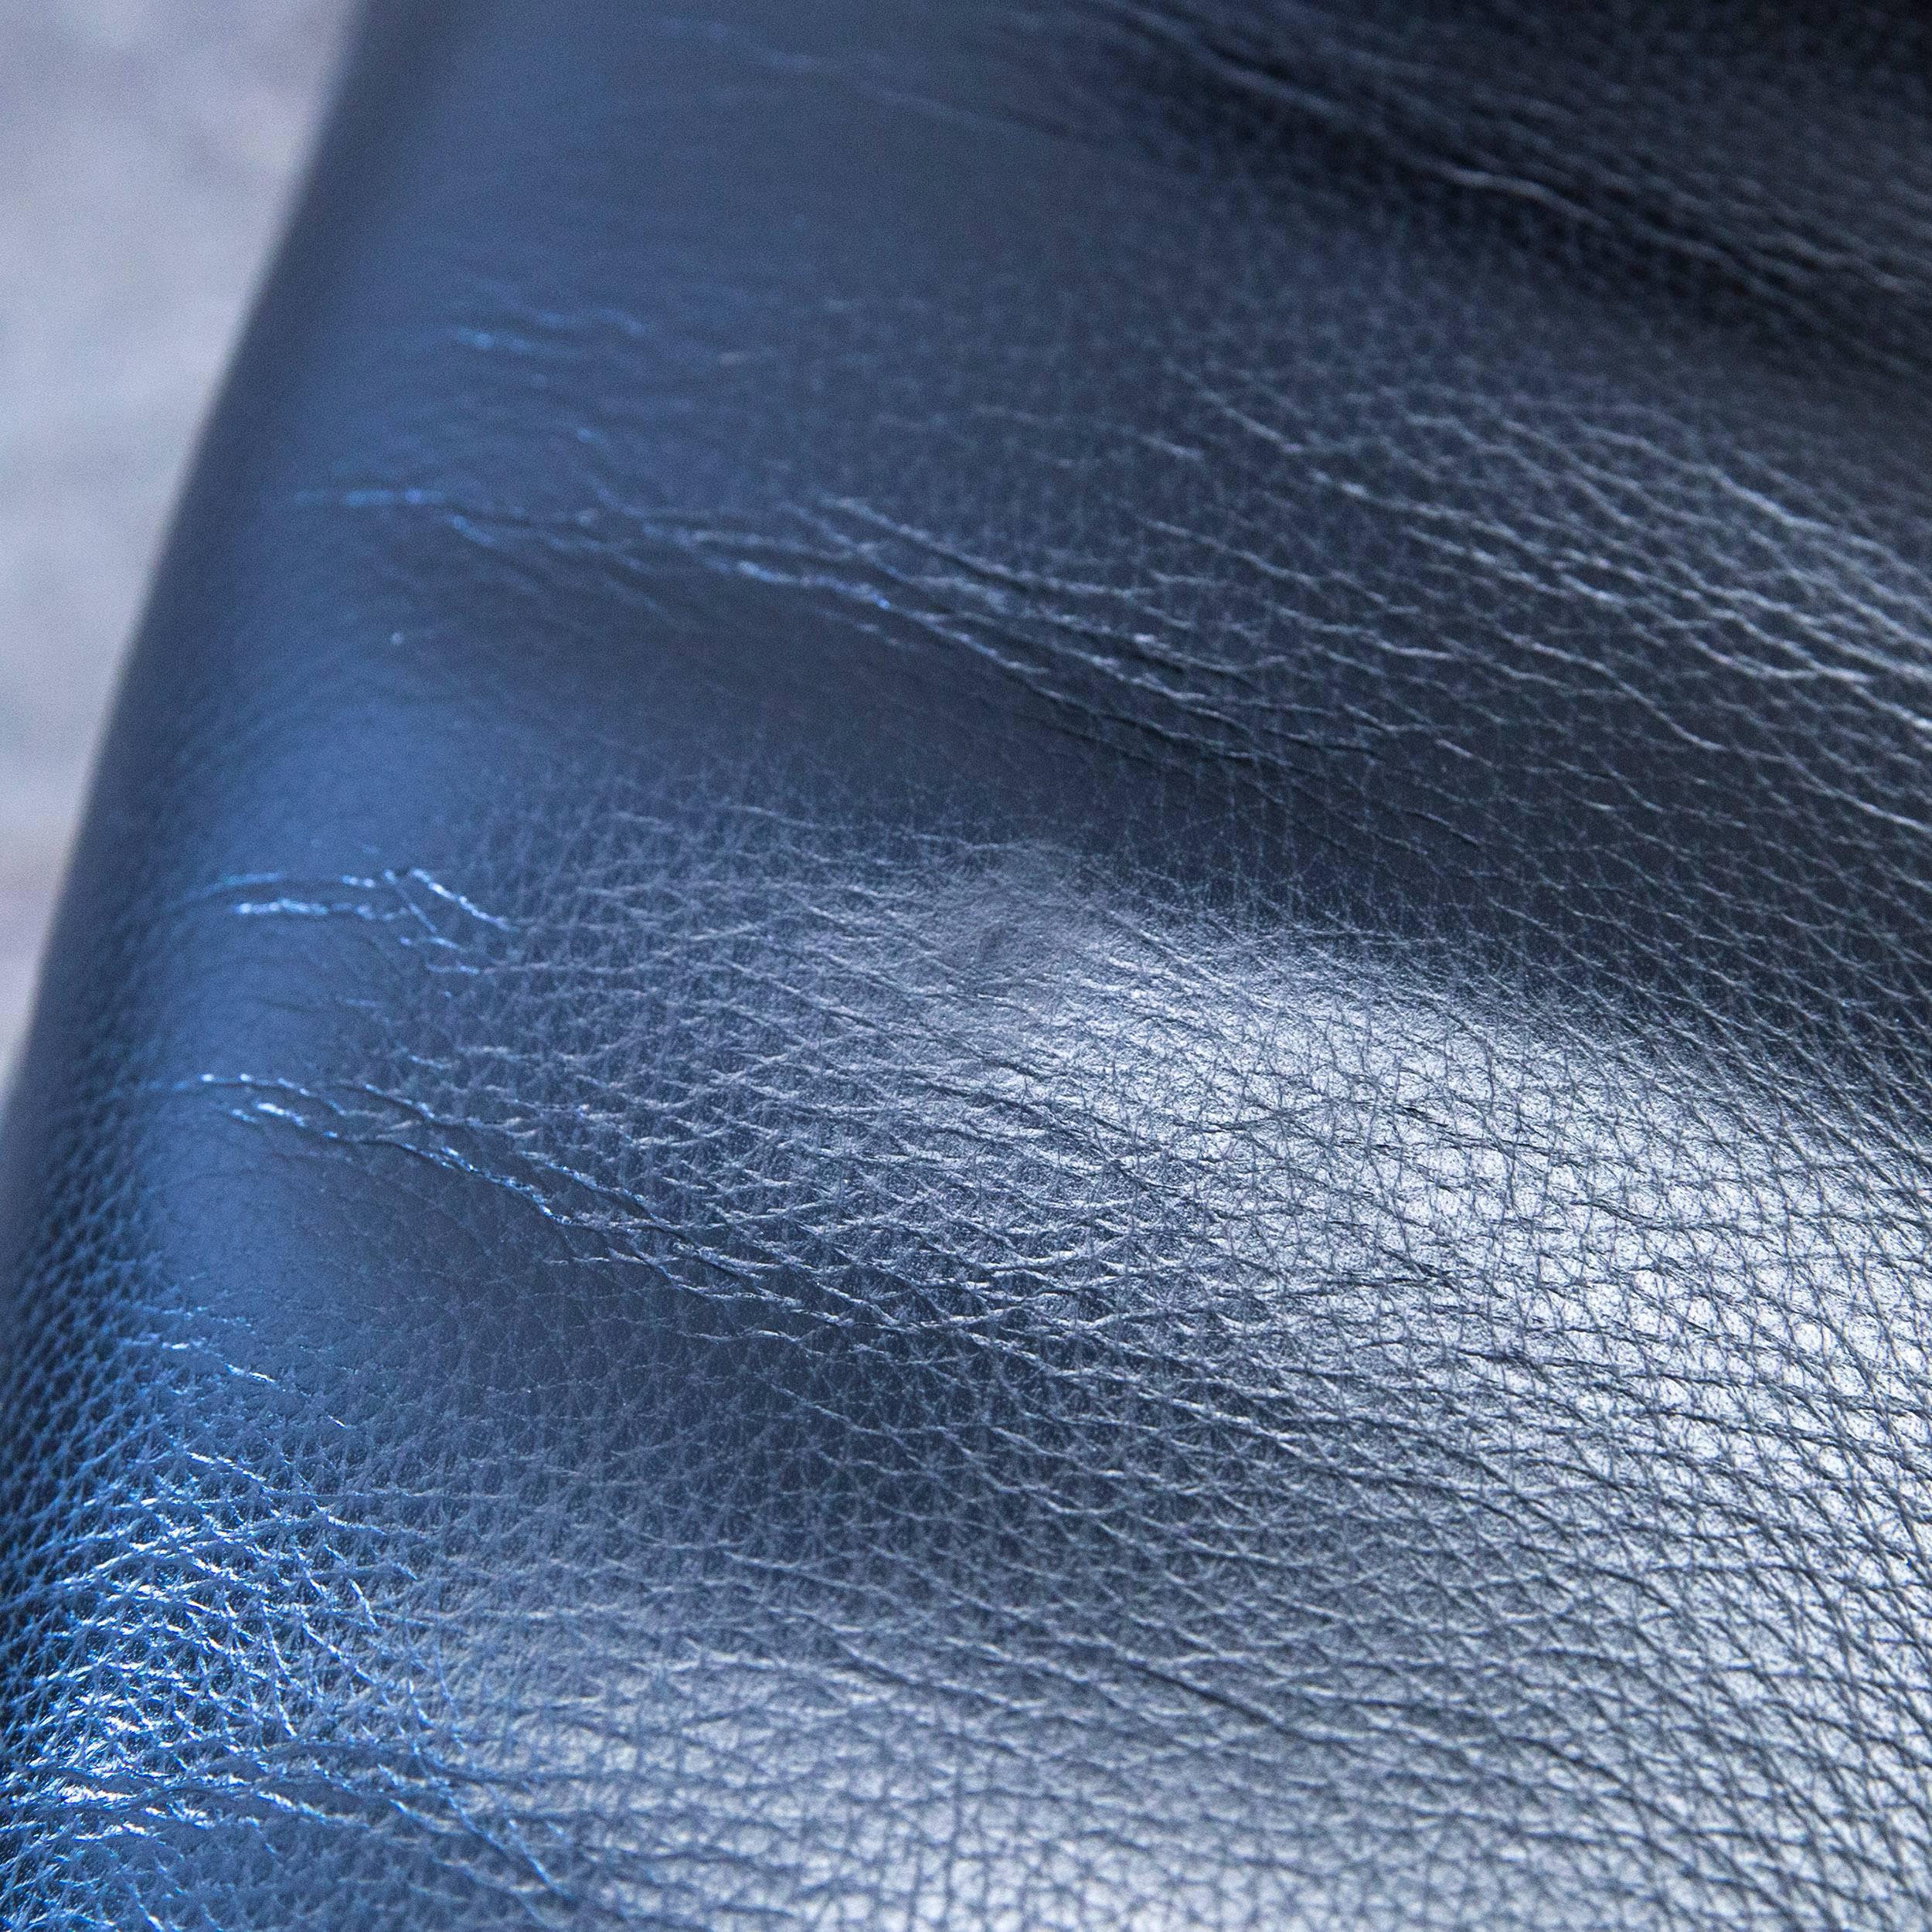 Leolux Tango Designer Leather Sofa Black Two-Seat Function Modern For Sale 2